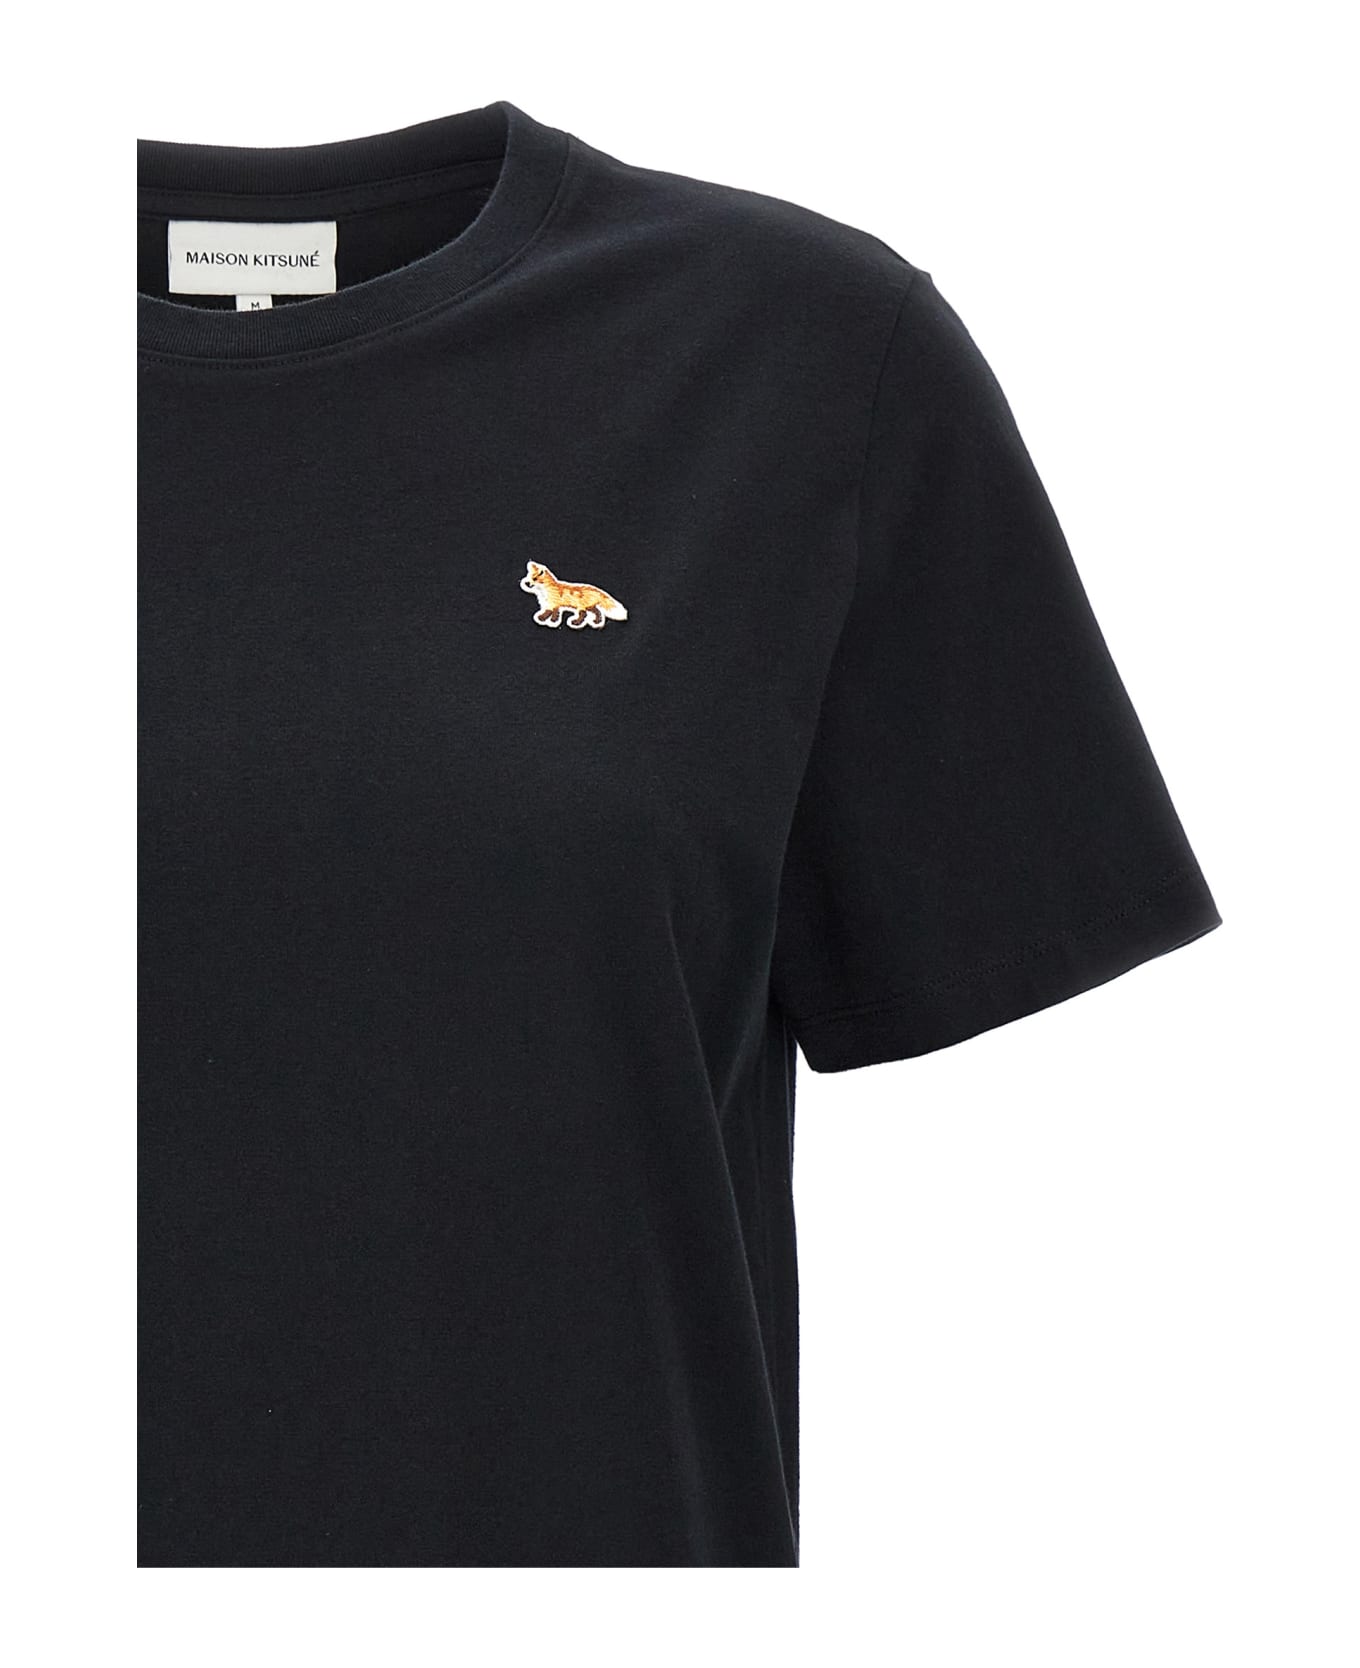 Maison Kitsuné 'baby Fox' T-shirt - Black   Tシャツ